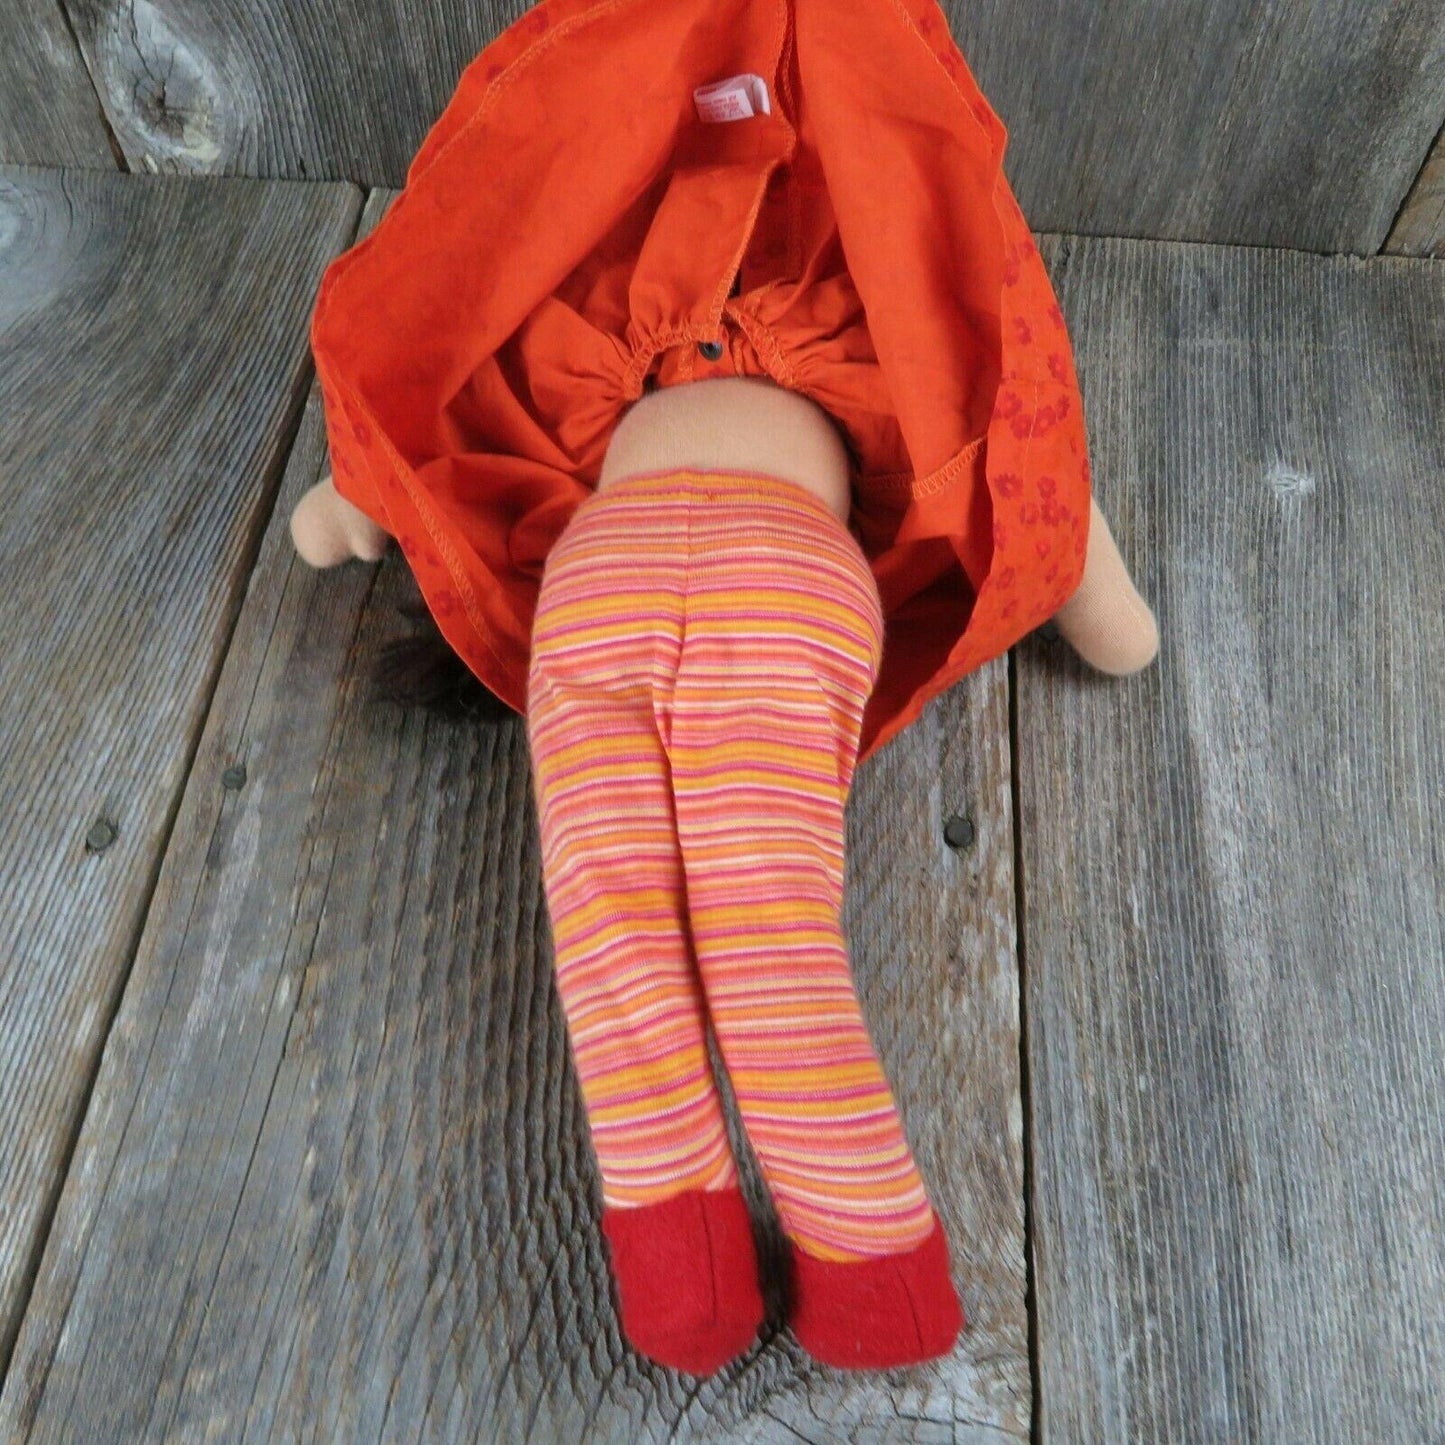 Kathe Kruse Baby Doll Soft Body Rag Plush Heirloom Brunette Braids Orange Dress